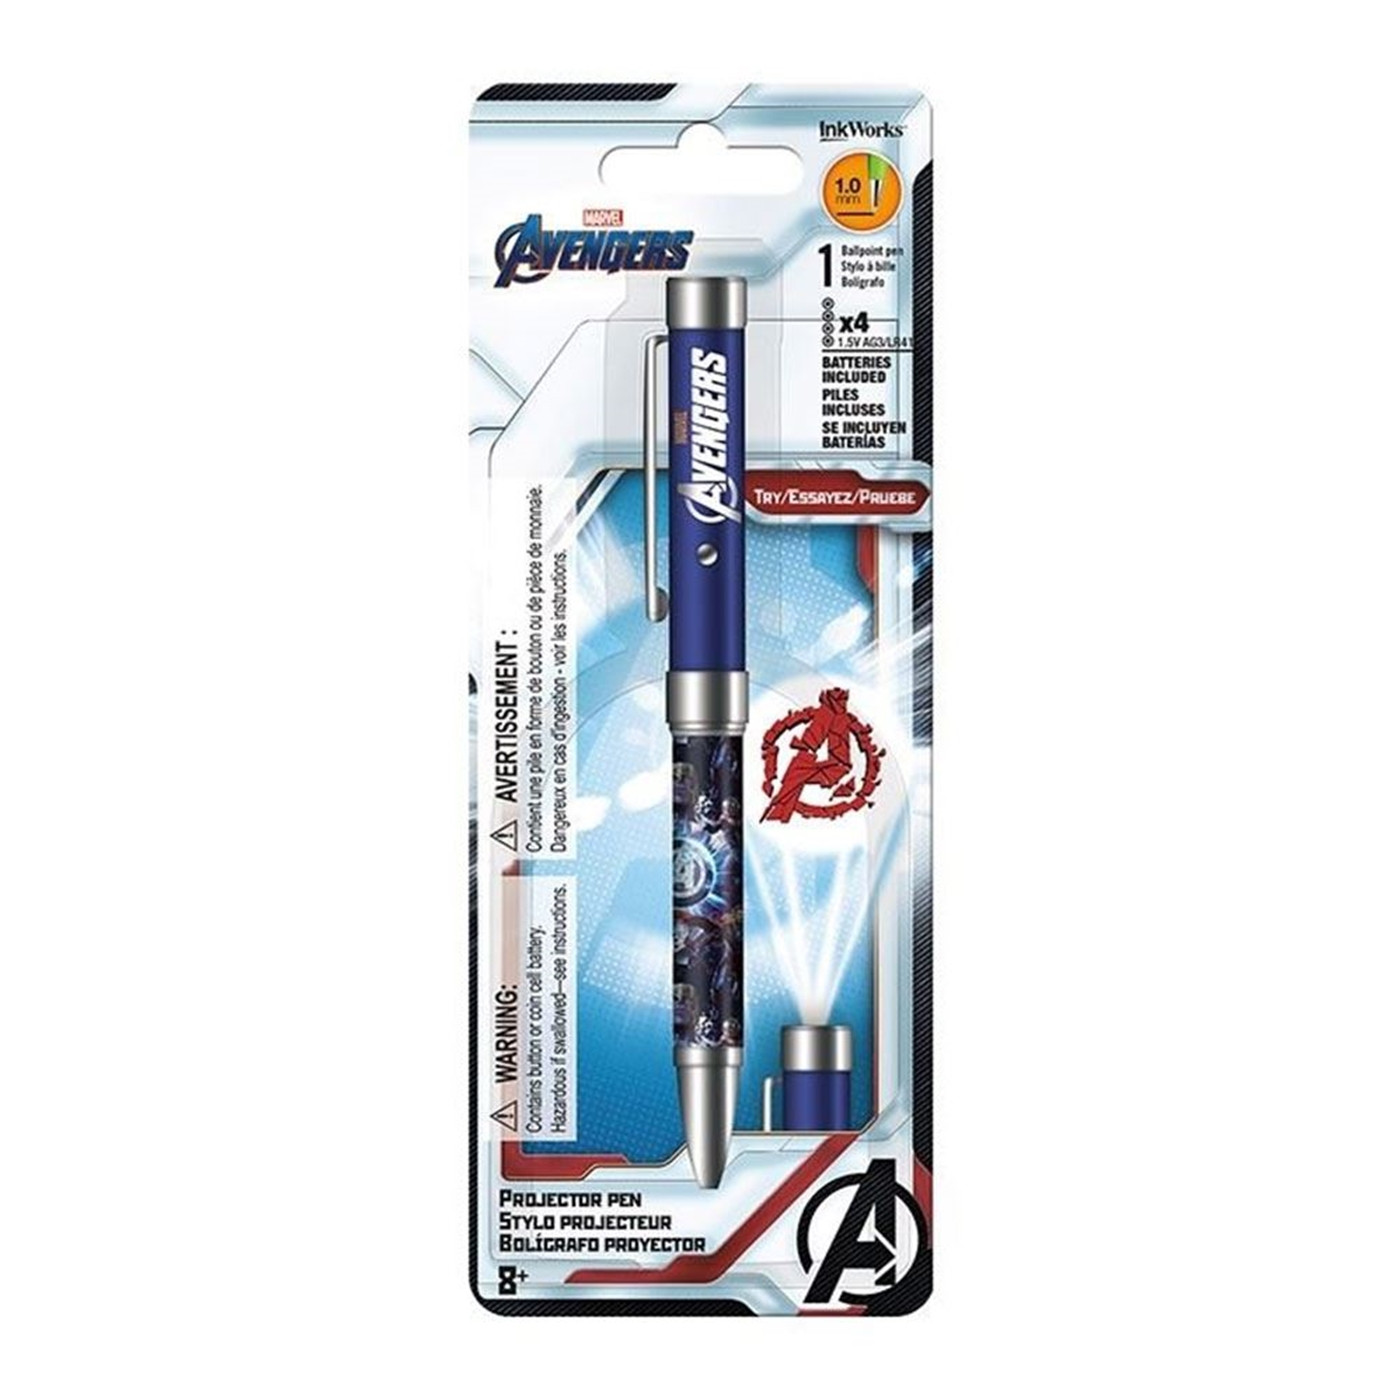 Avengers Endgame Projector Pen